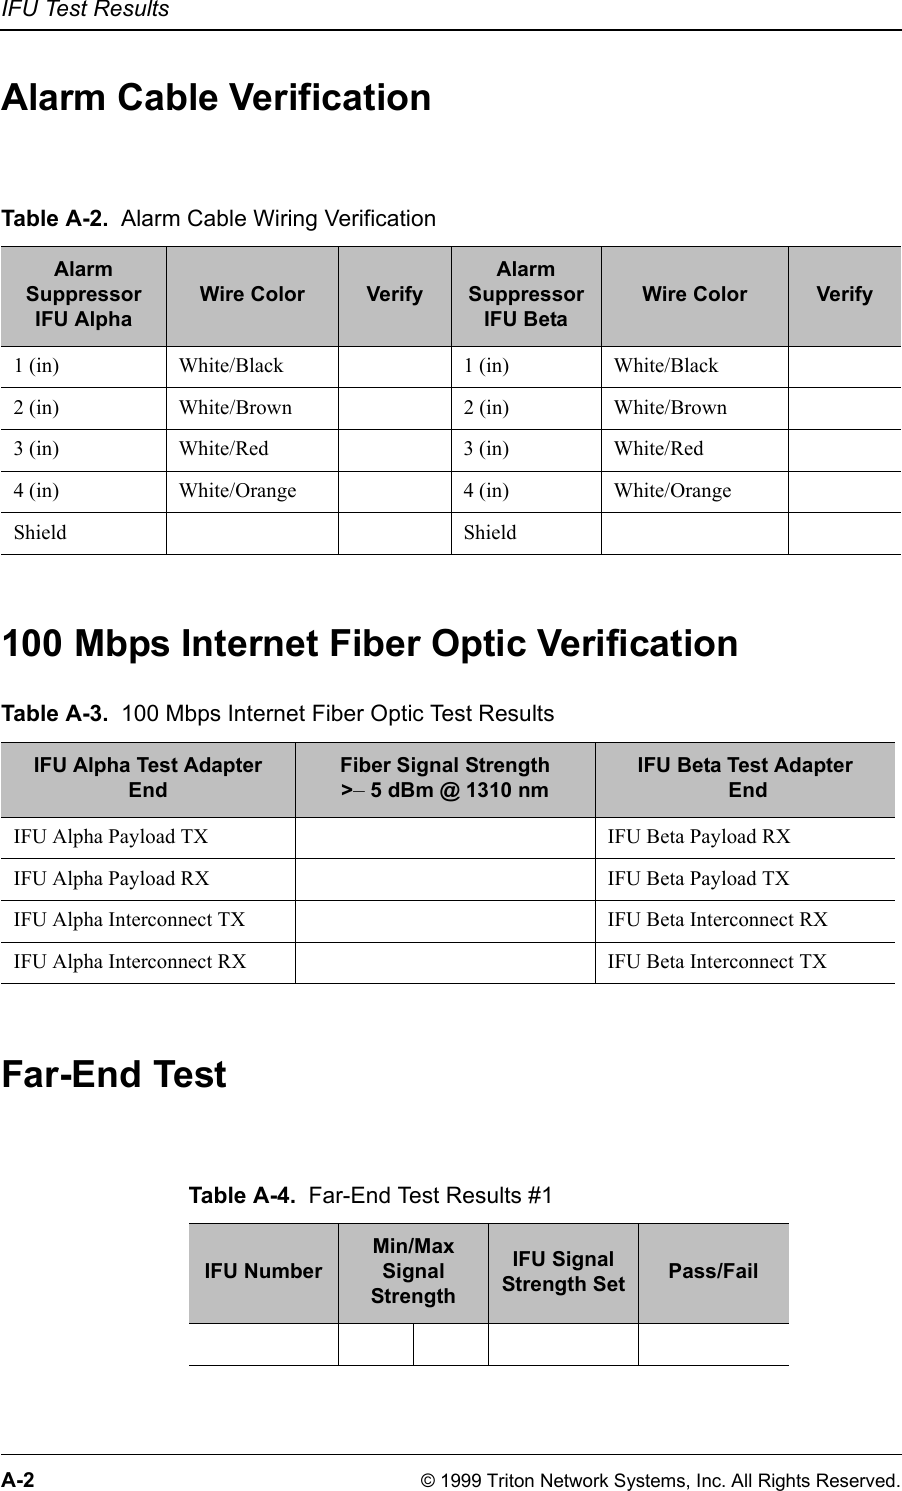 IFU Test ResultsA-2 © 1999 Triton Network Systems, Inc. All Rights Reserved.Alarm Cable Verification 100 Mbps Internet Fiber Optic VerificationFar-End Test Table A-2. Alarm Cable Wiring VerificationAlarmSuppressorIFU AlphaWire Color VerifyAlarmSuppressorIFU BetaWire Color Verify1 (in) White/Black  1 (in) White/Black2 (in) White/Brown  2 (in) White/Brown3 (in) White/Red 3 (in) White/Red4 (in) White/Orange  4 (in) White/OrangeShield ShieldTable A-3. 100 Mbps Internet Fiber Optic Test ResultsIFU Alpha Test Adapter EndFiber Signal Strength&gt;– 5 dBm @ 1310 nmIFU Beta Test Adapter EndIFU Alpha Payload TX IFU Beta Payload RXIFU Alpha Payload RX IFU Beta Payload TXIFU Alpha Interconnect TX IFU Beta Interconnect RXIFU Alpha Interconnect RX IFU Beta Interconnect TXTable A-4. Far-End Test Results #1IFU NumberMin/MaxSignal StrengthIFU Signal Strength Set Pass/Fail